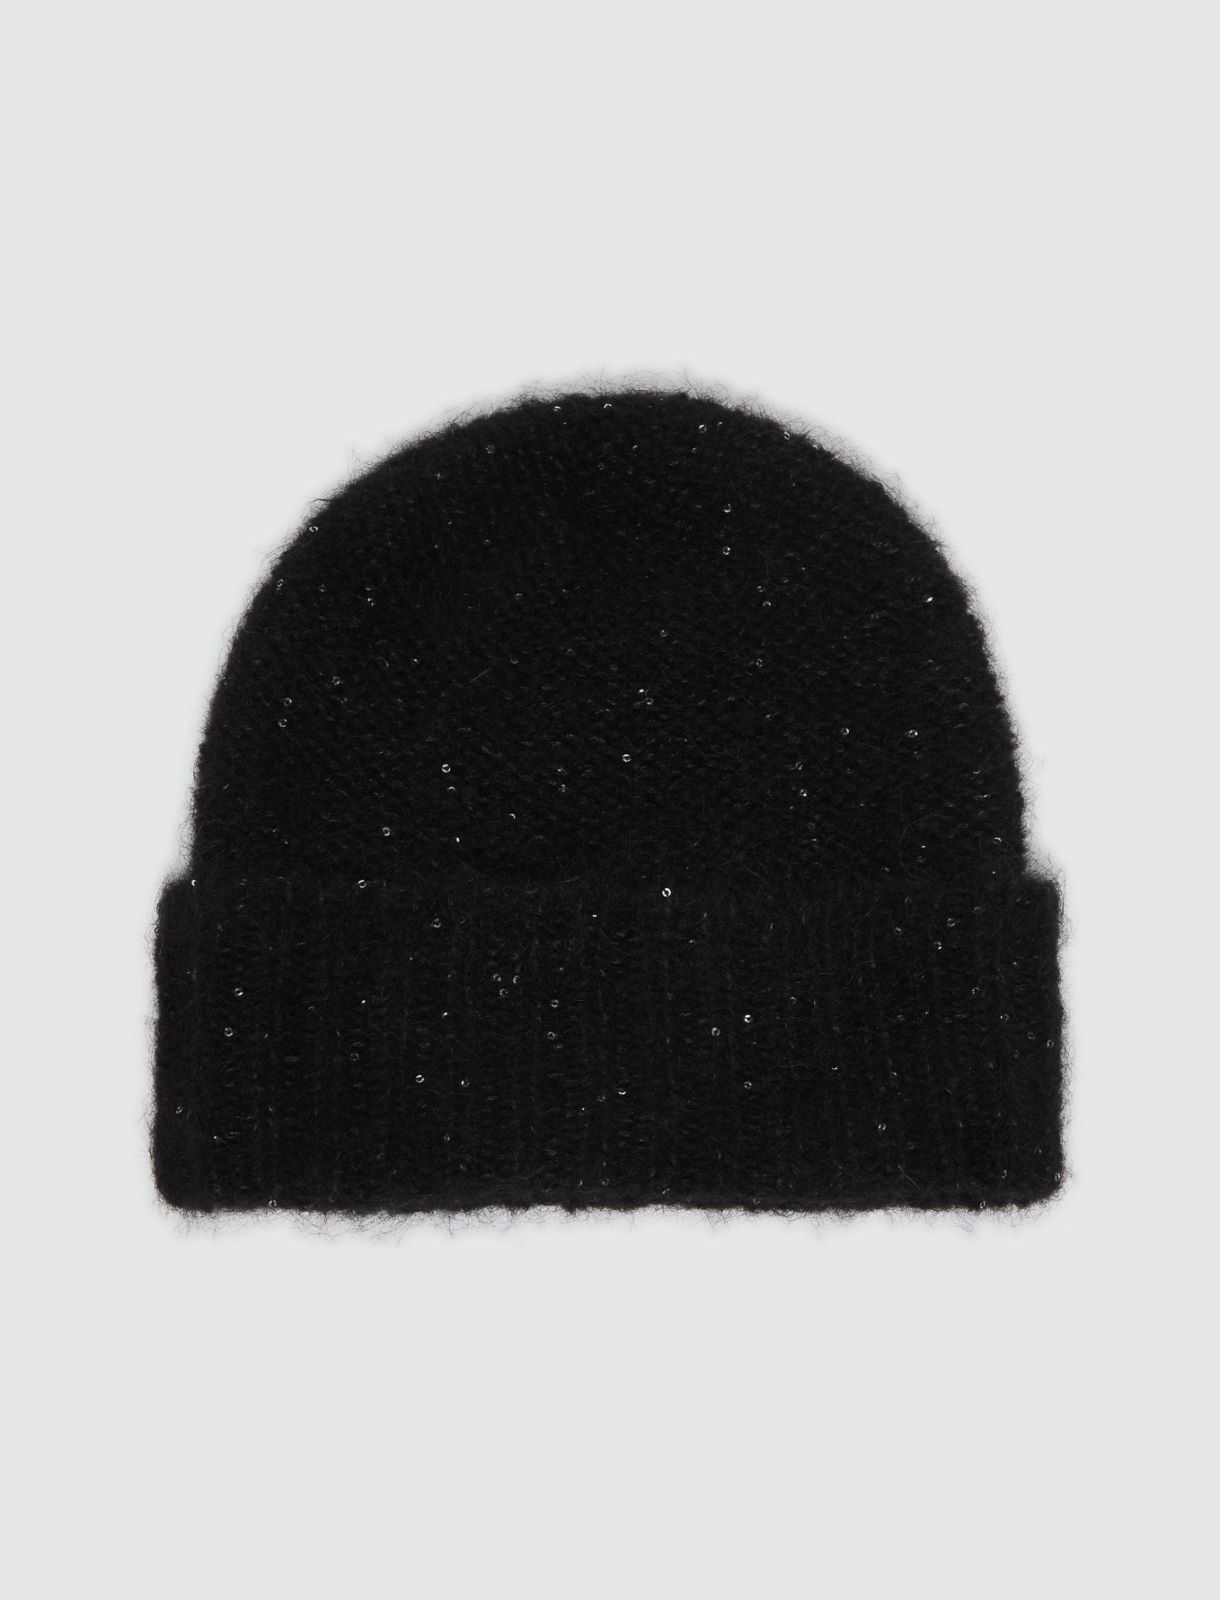 Sequin beanie hat - Black - Marella